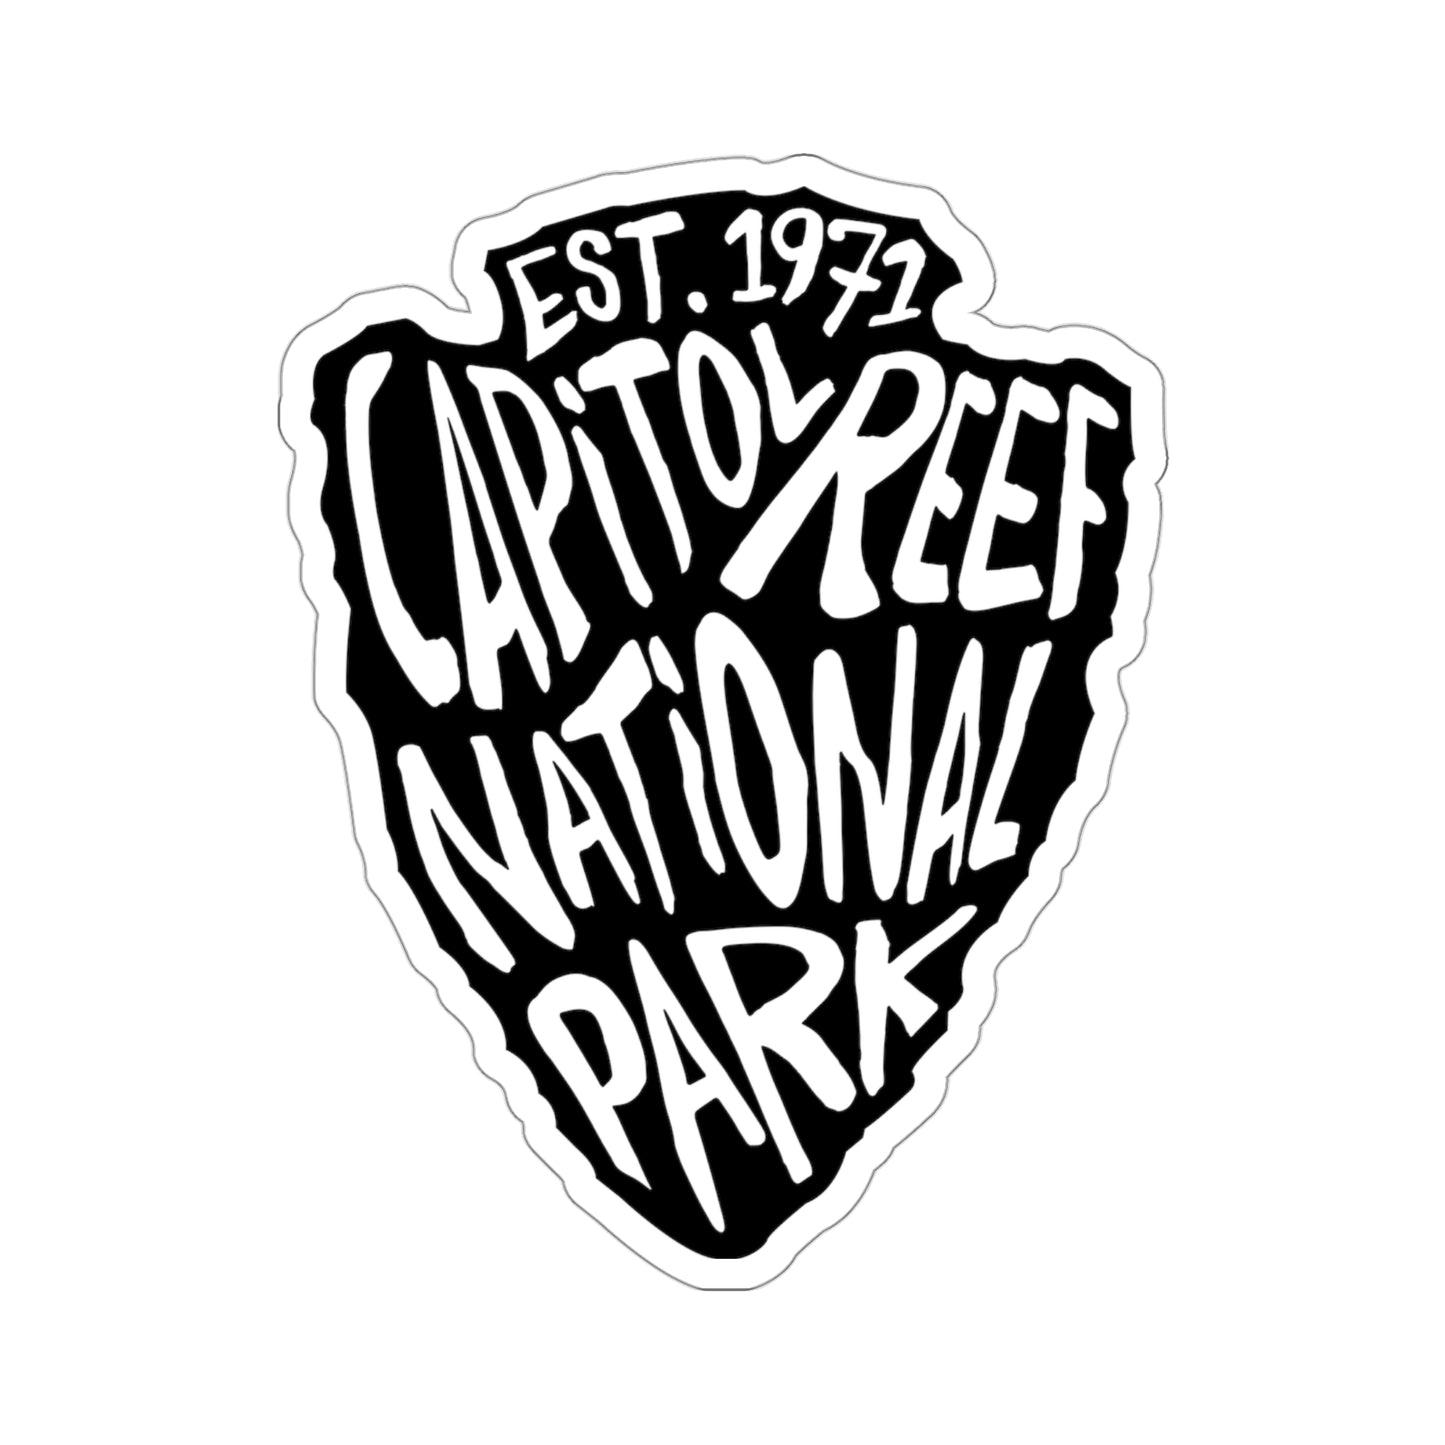 Capitol Reef National Park Sticker - Arrow Head Design